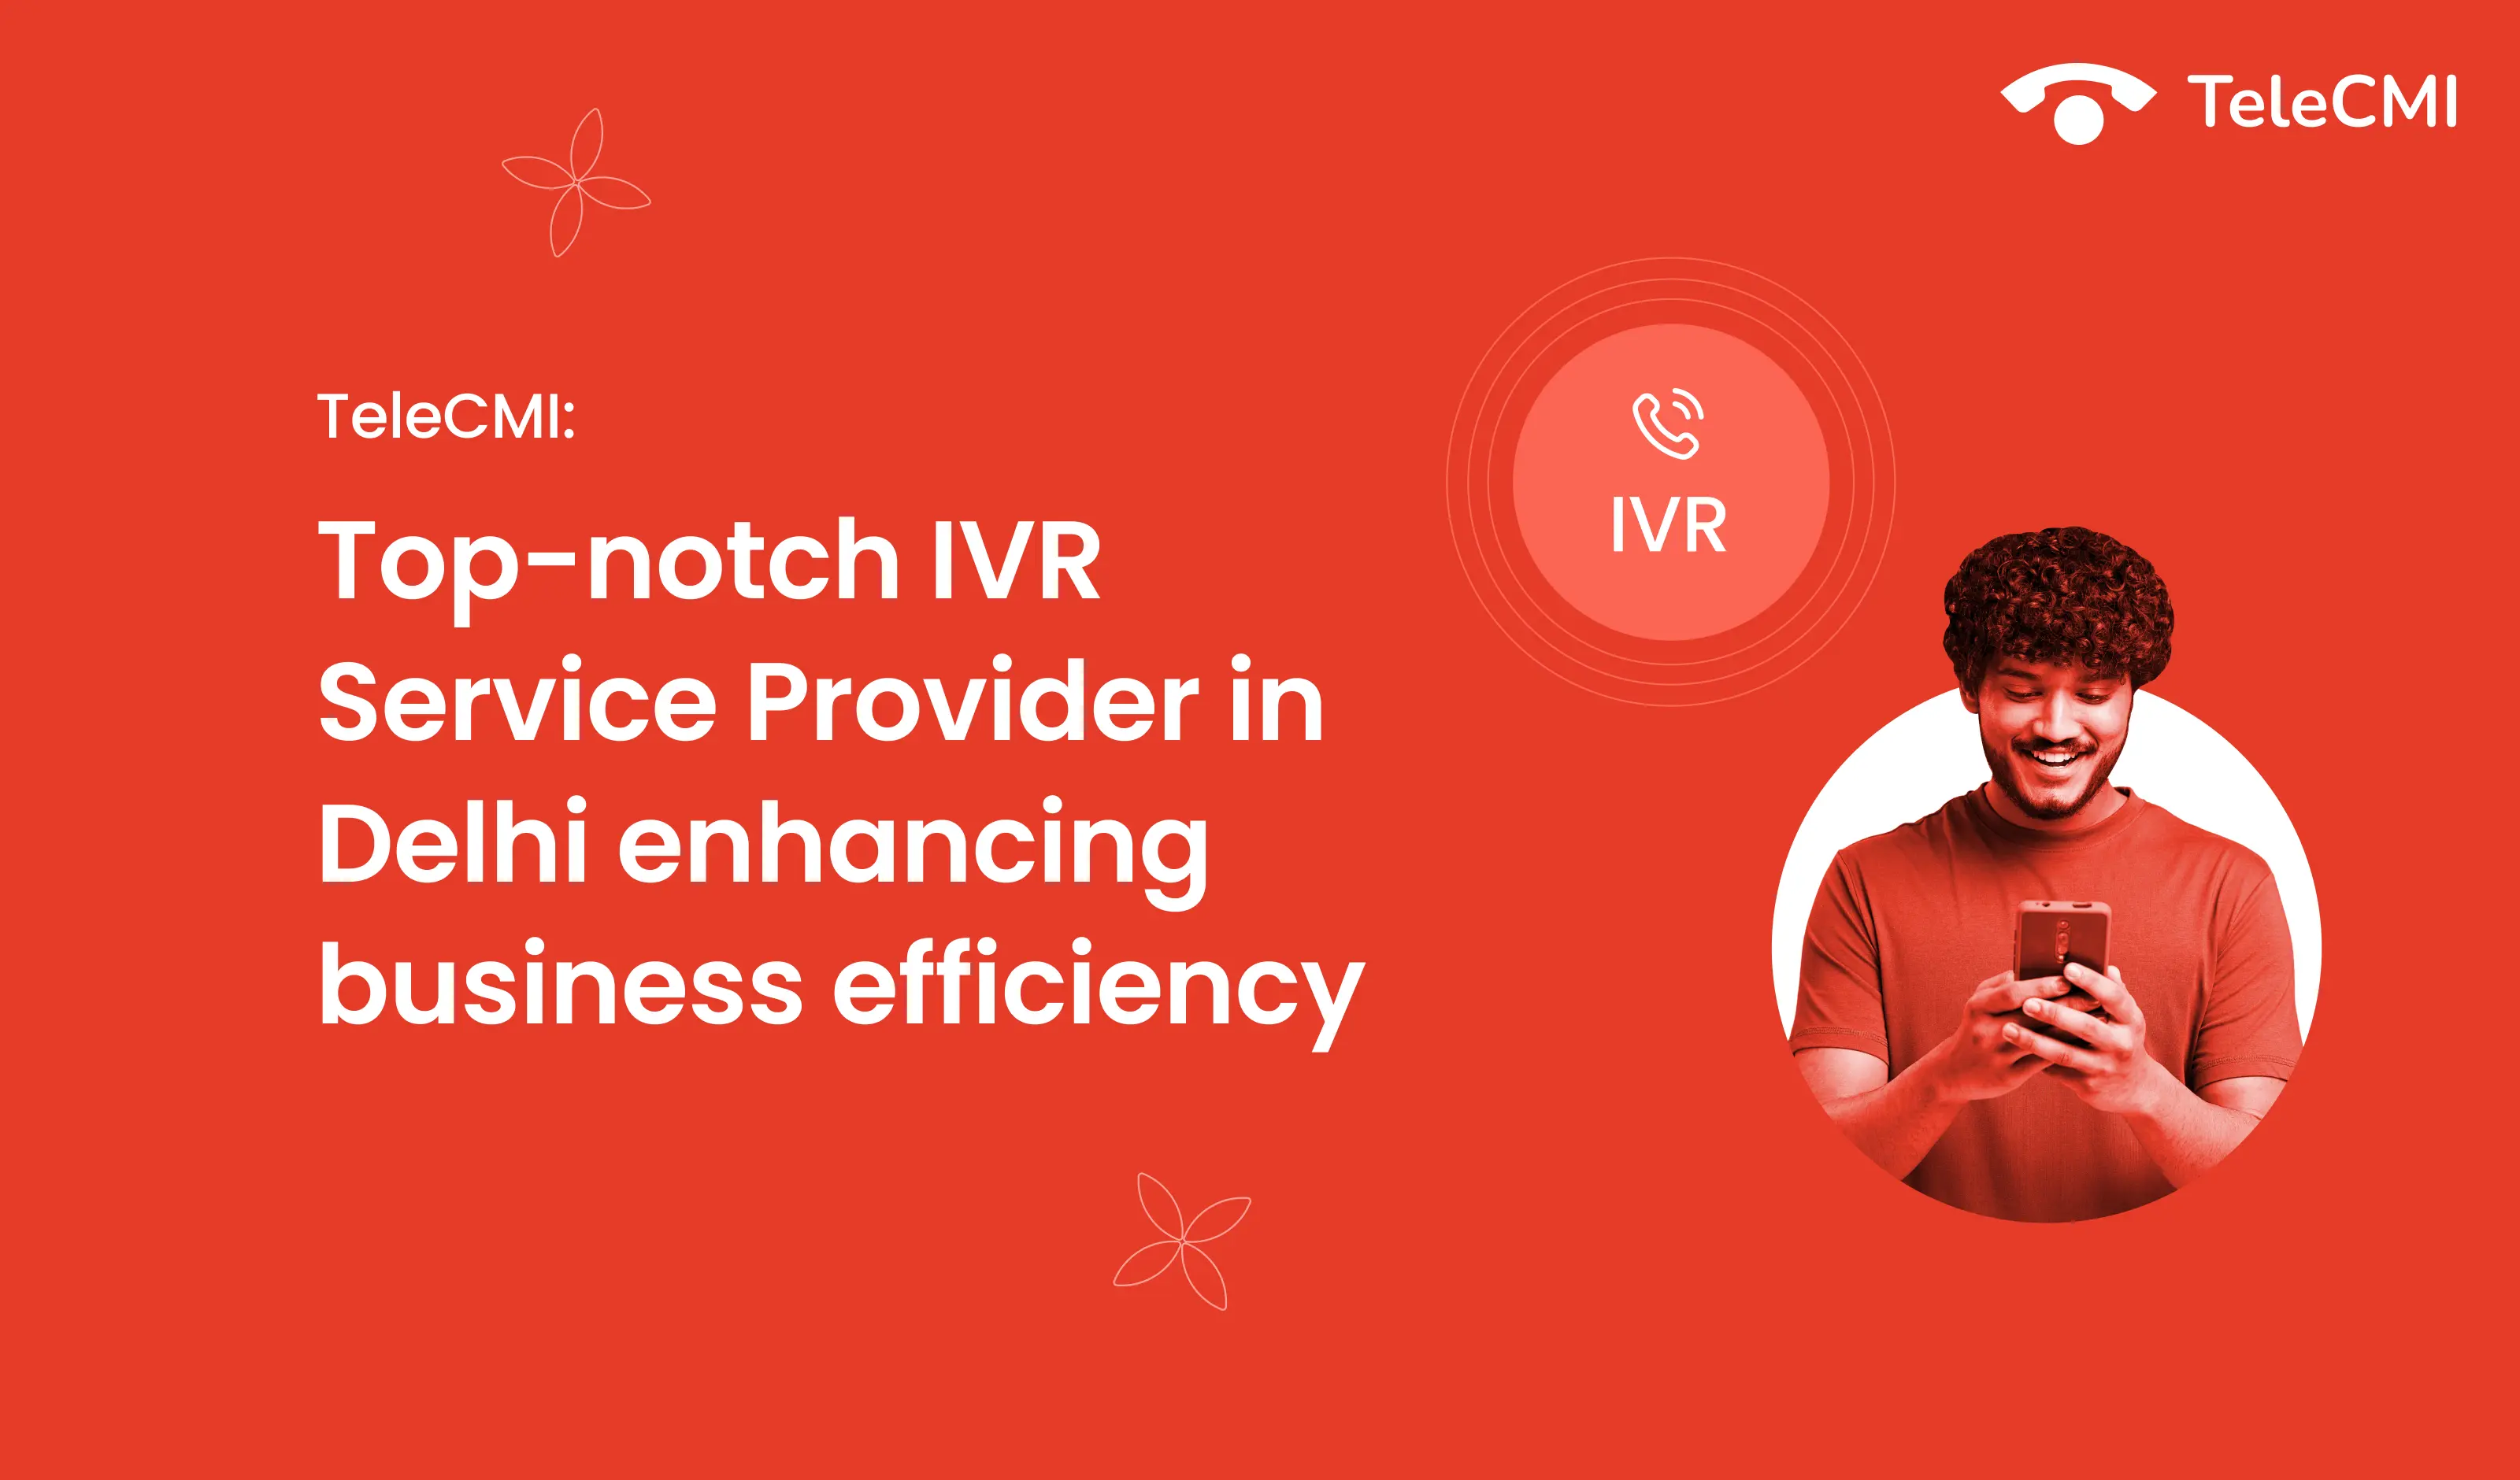 TeleCMI: Top-notch IVR Service Provider in Delhi
                        Enhancing Business Efficiency